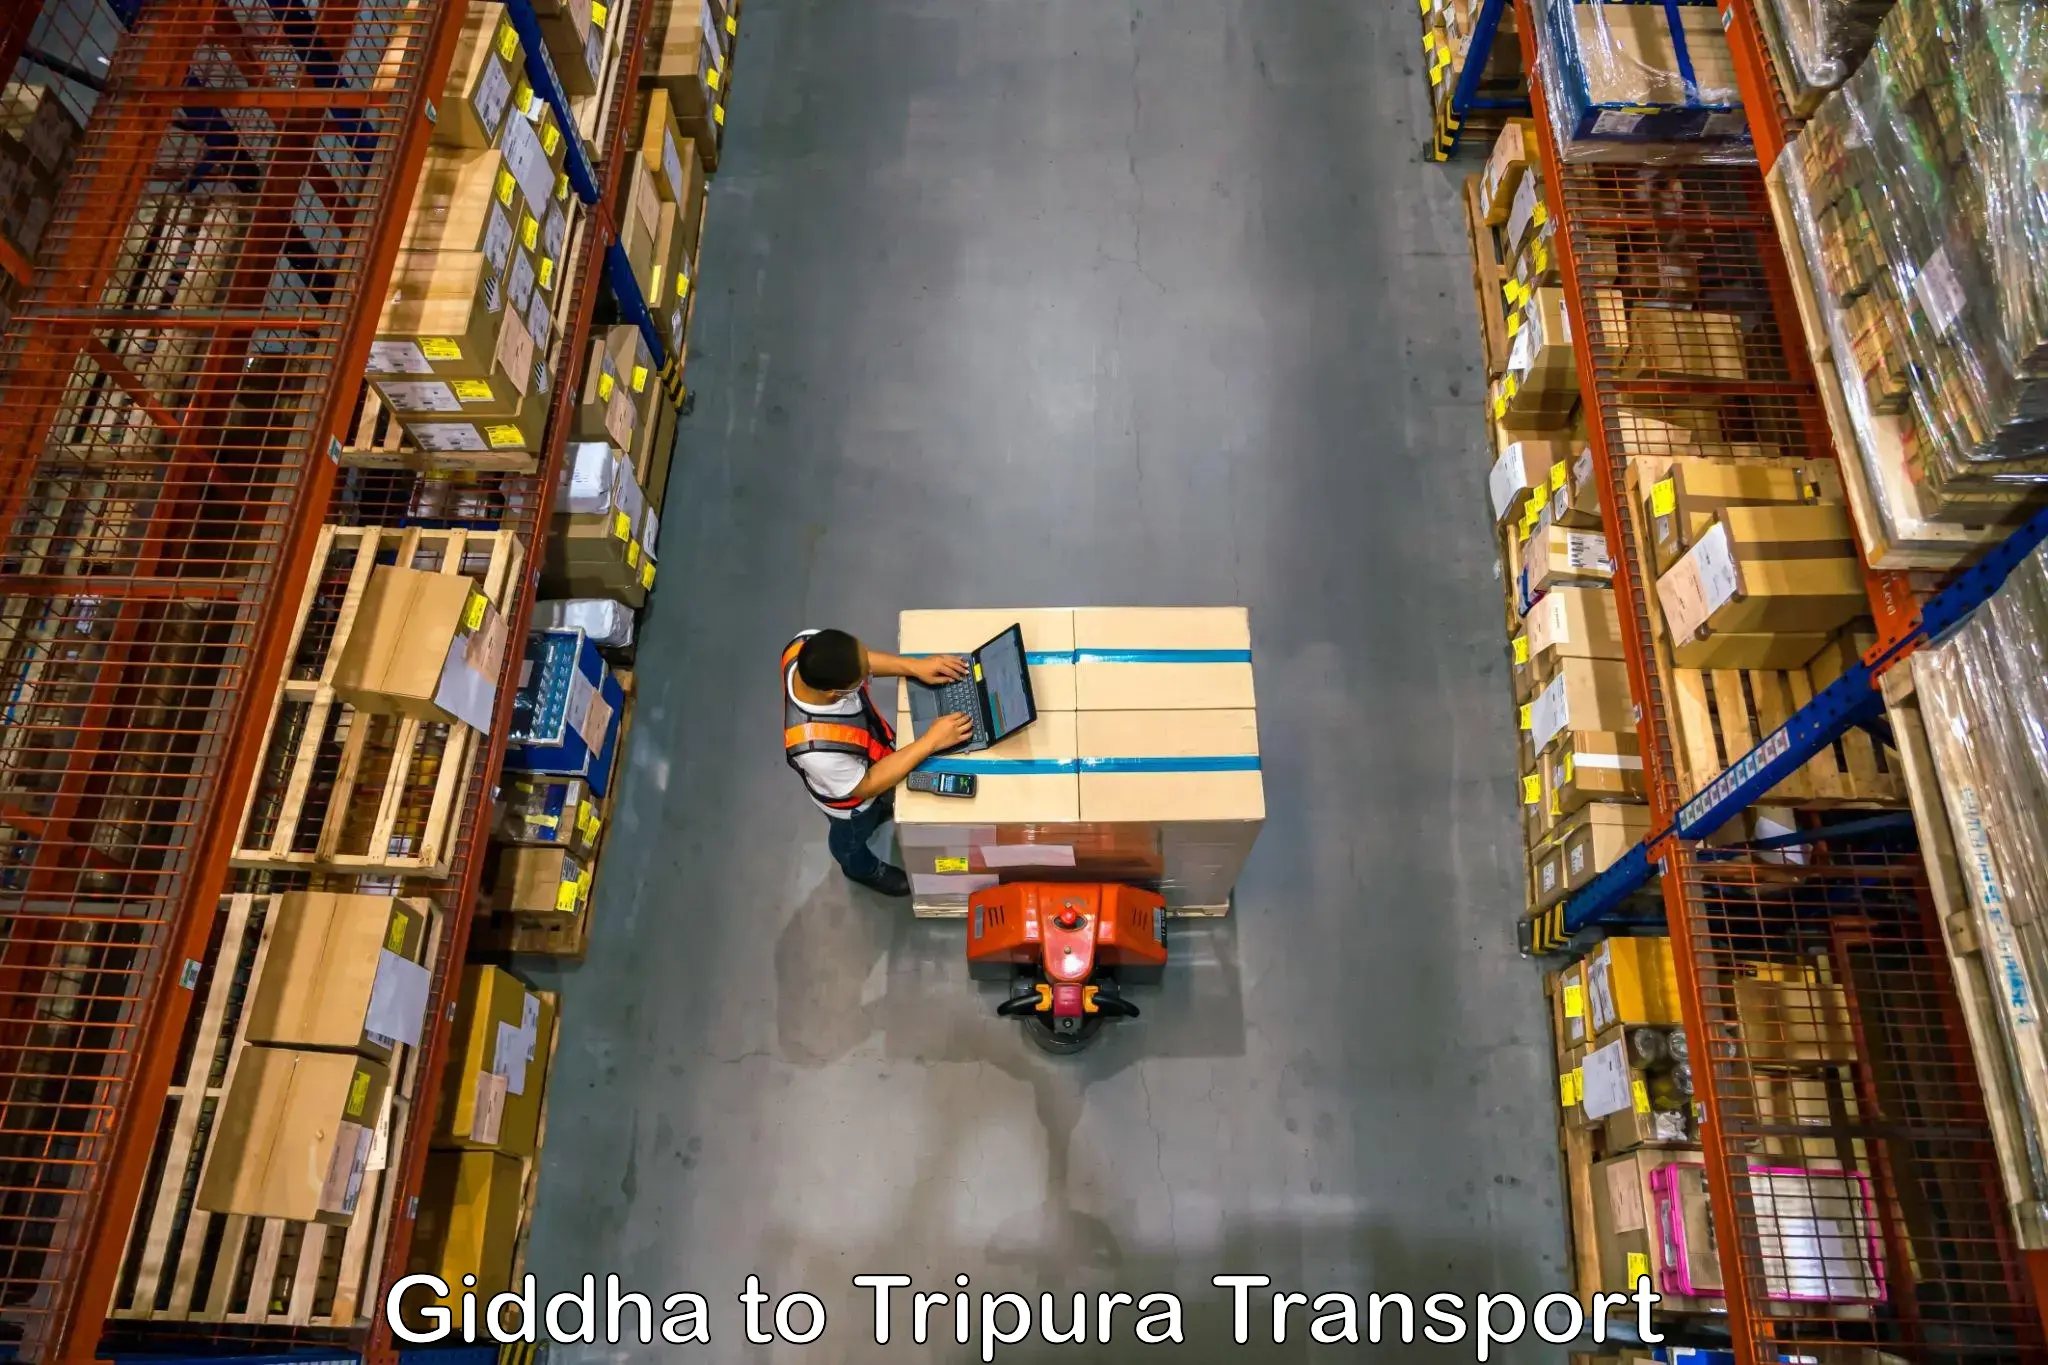 Delivery service Giddha to Agartala